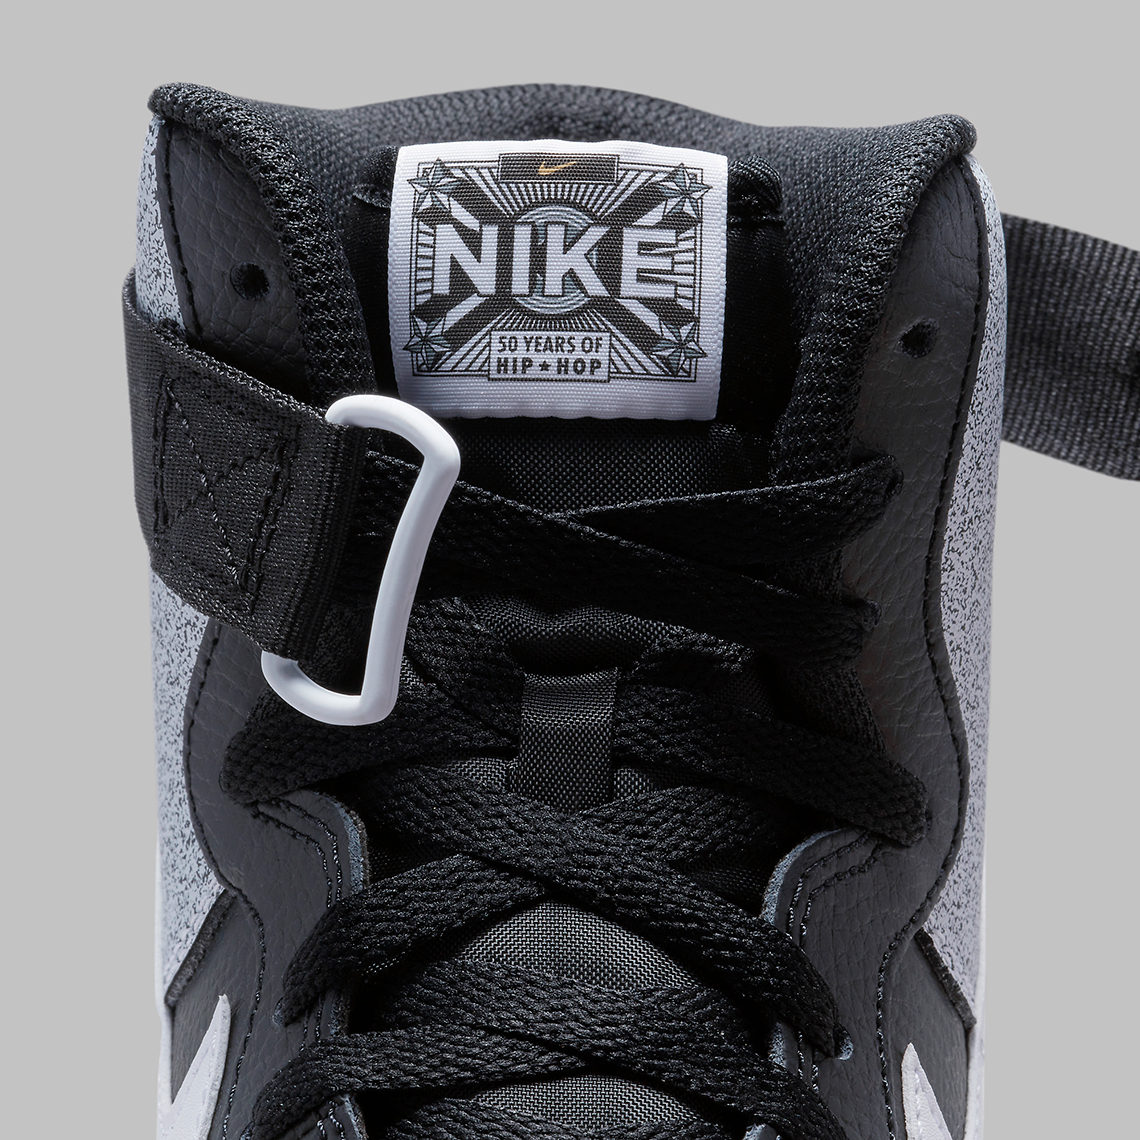 Nike Air Force 1 High Hip Hop FB2049-001 | SneakerNews.com